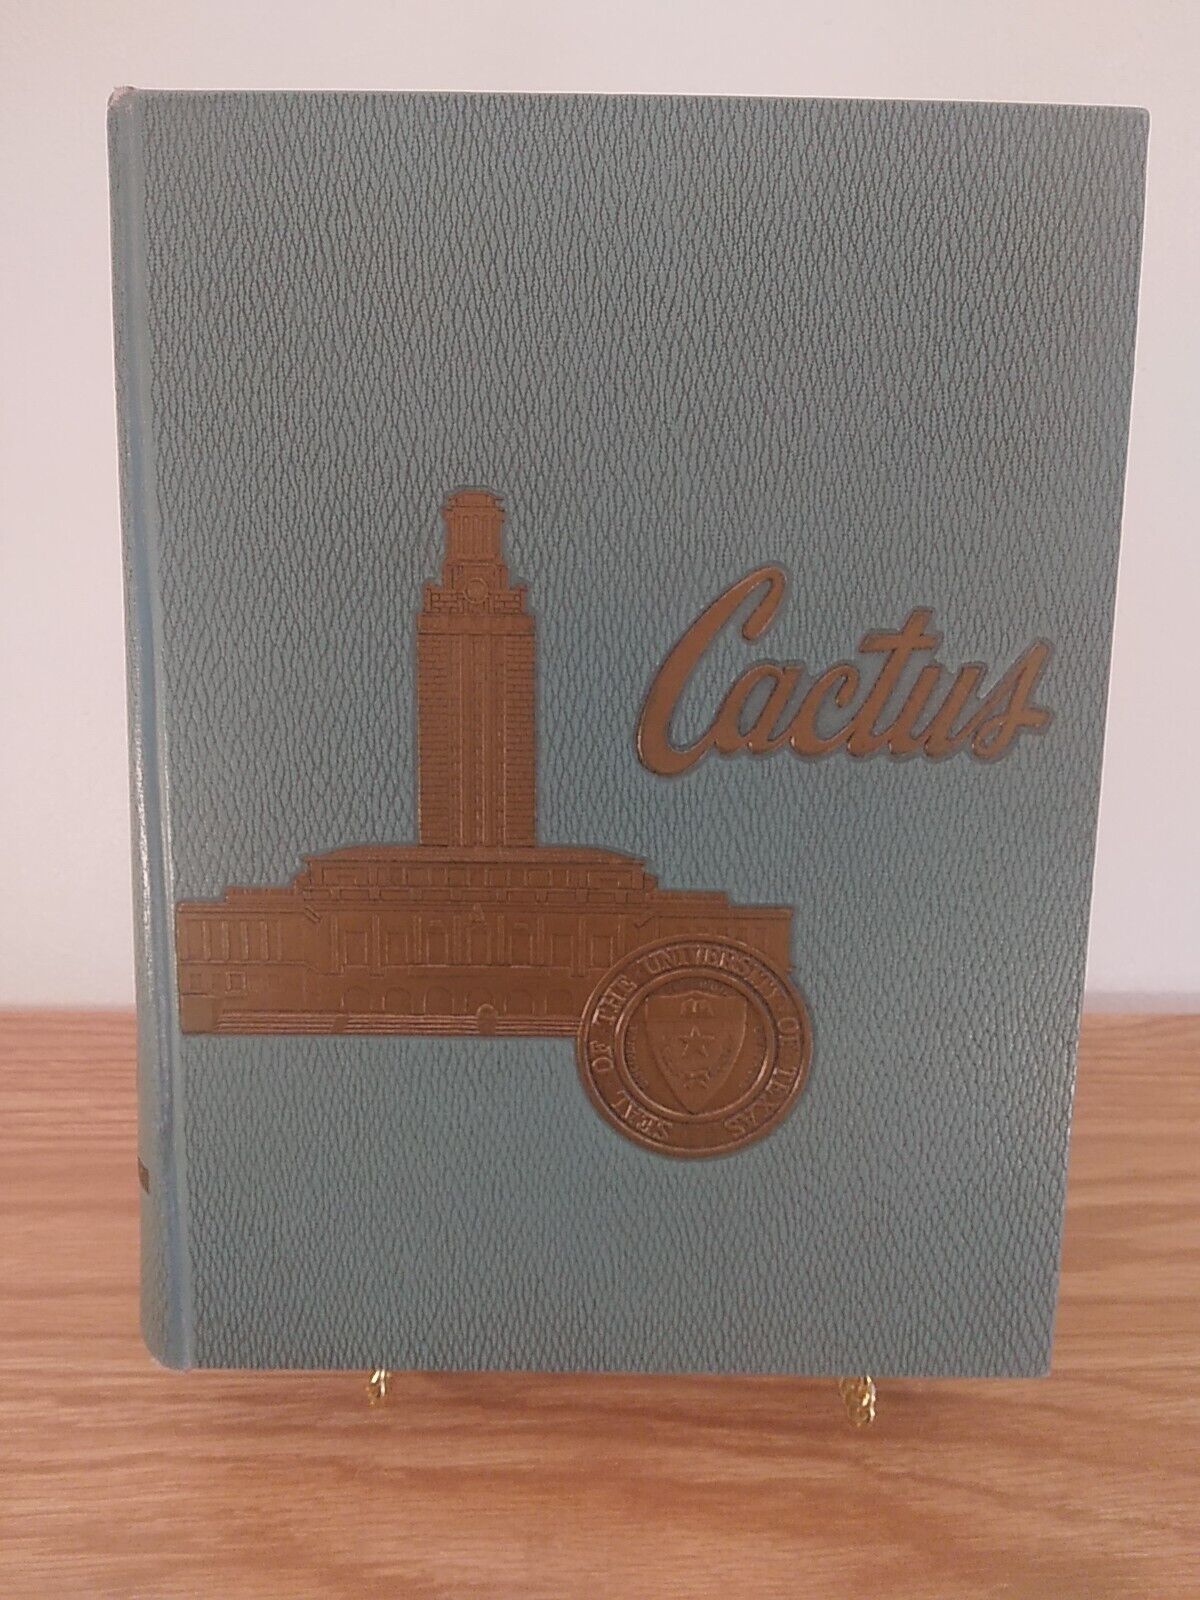 Vintage University of Texas 1952 “The Cactus” Yearbook Volume 59